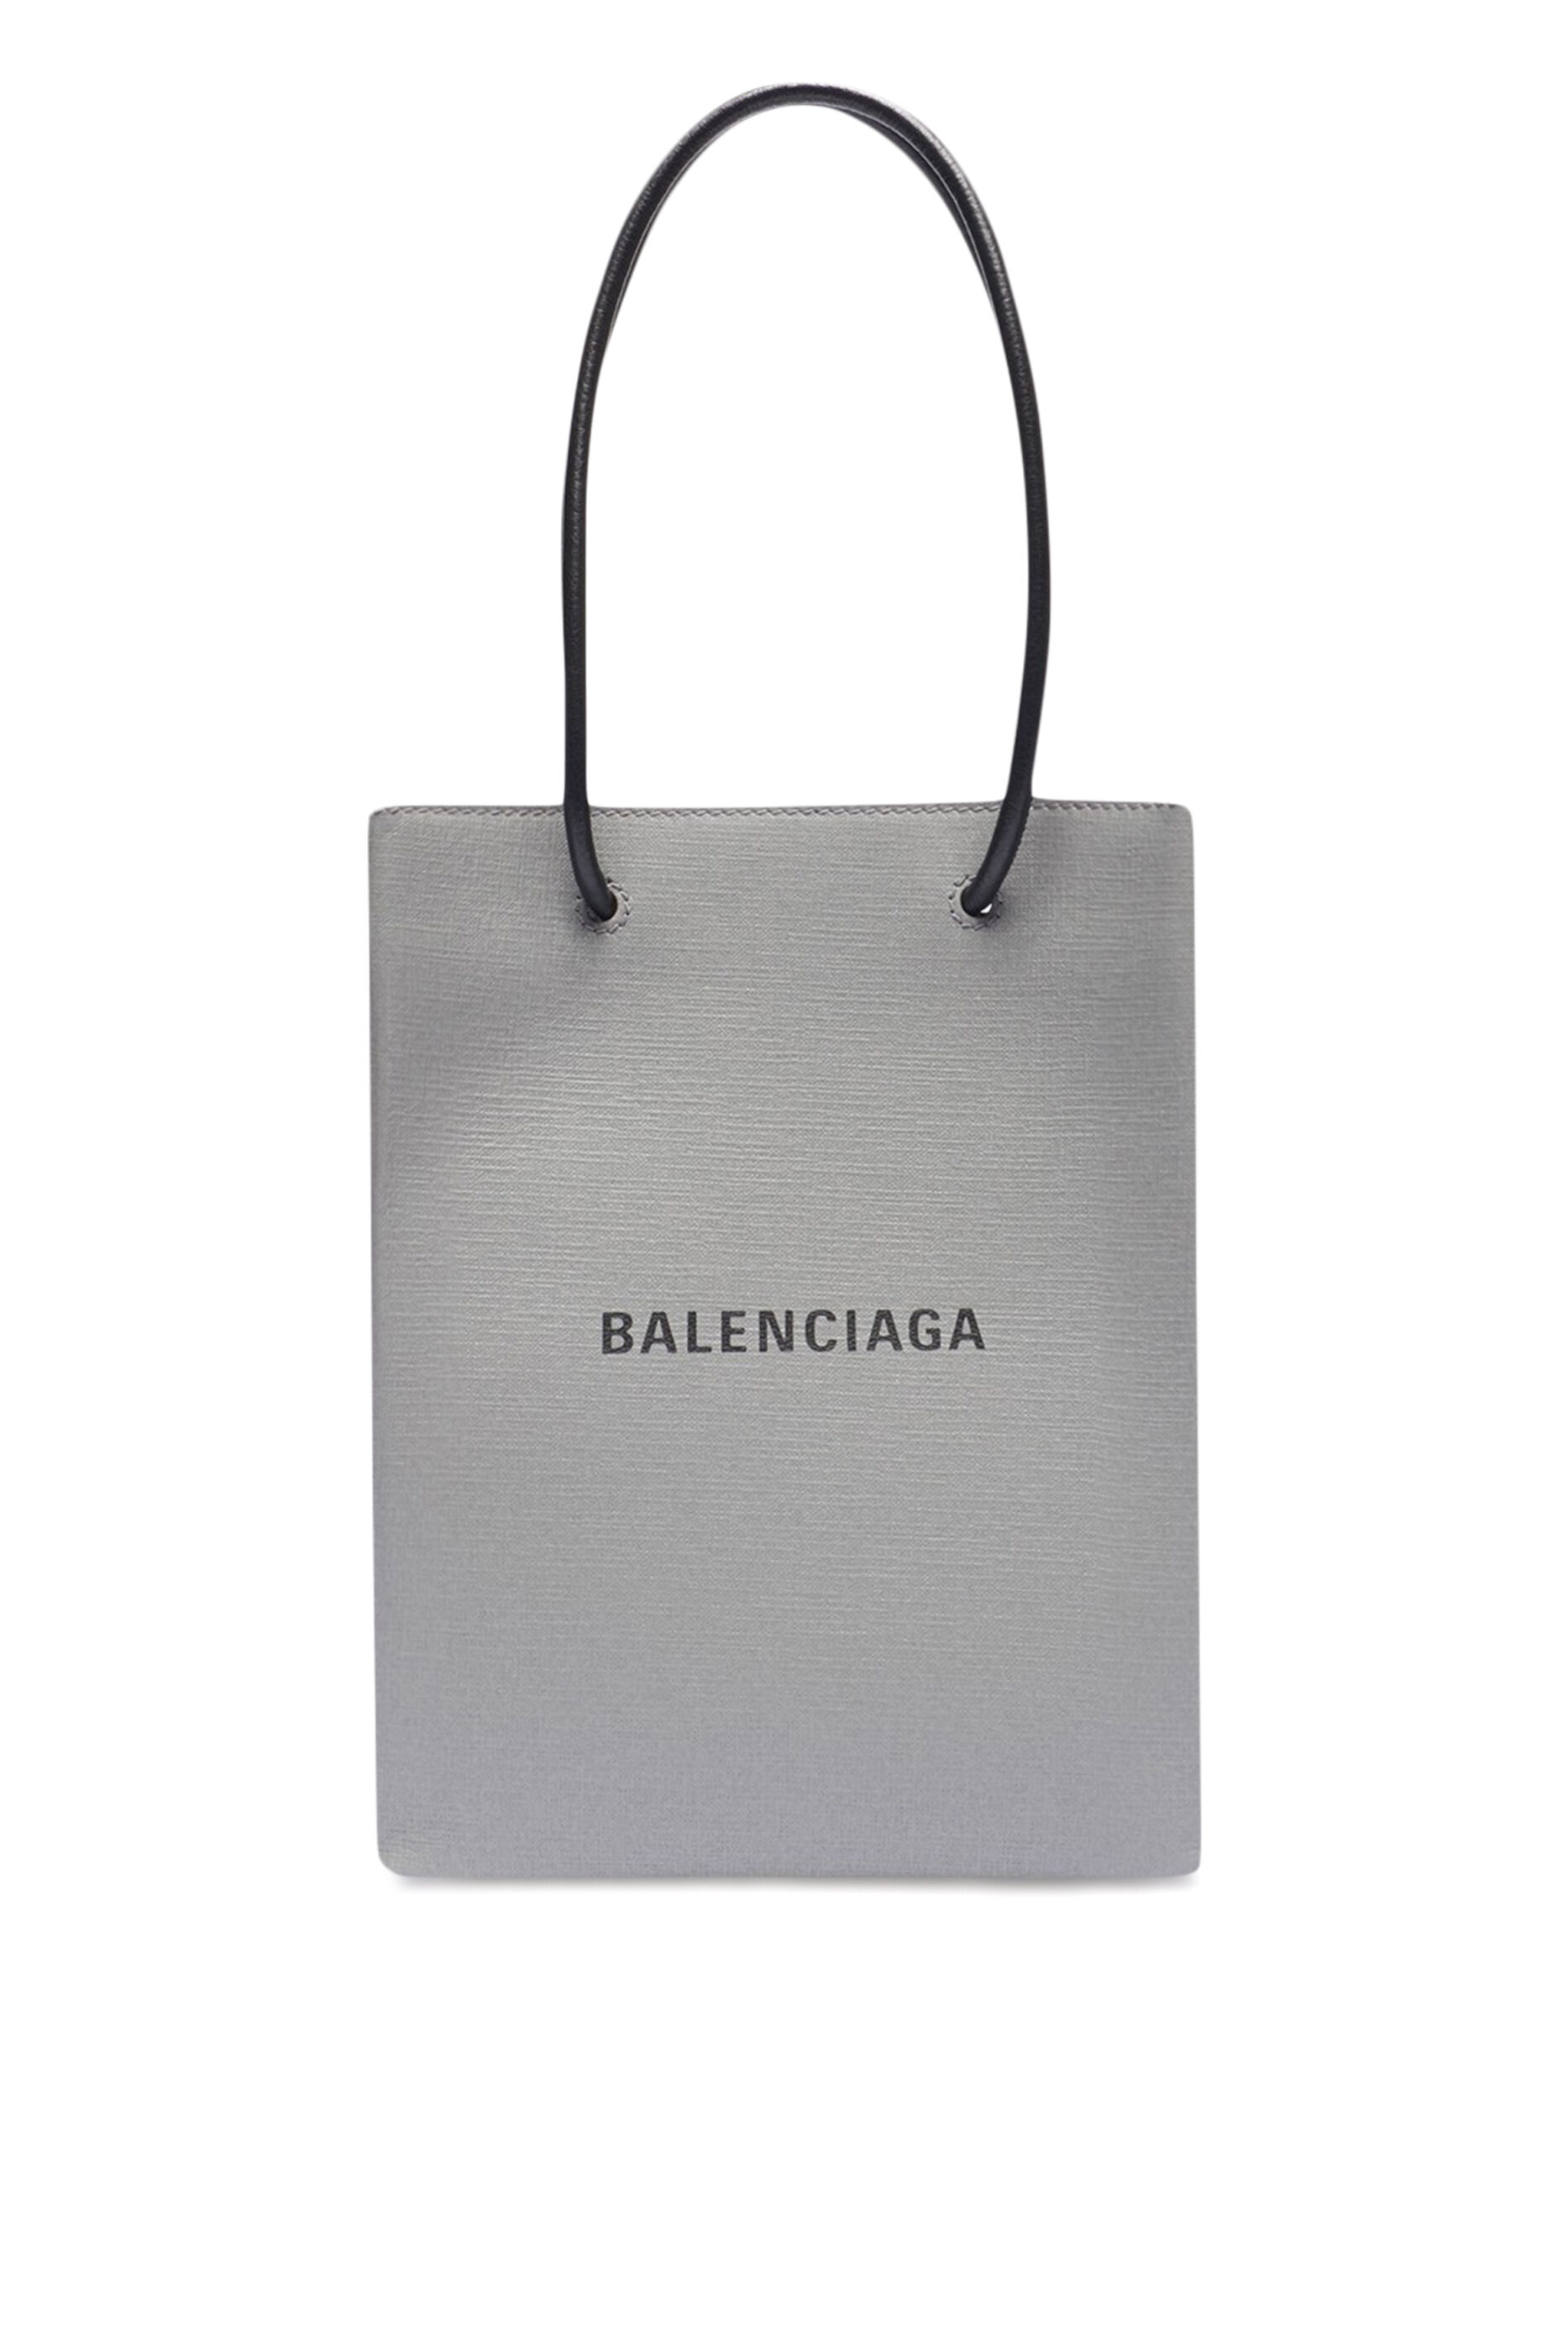 Balenciaga Shopping Bag Hotsell, 54% OFF | www.ingeniovirtual.com